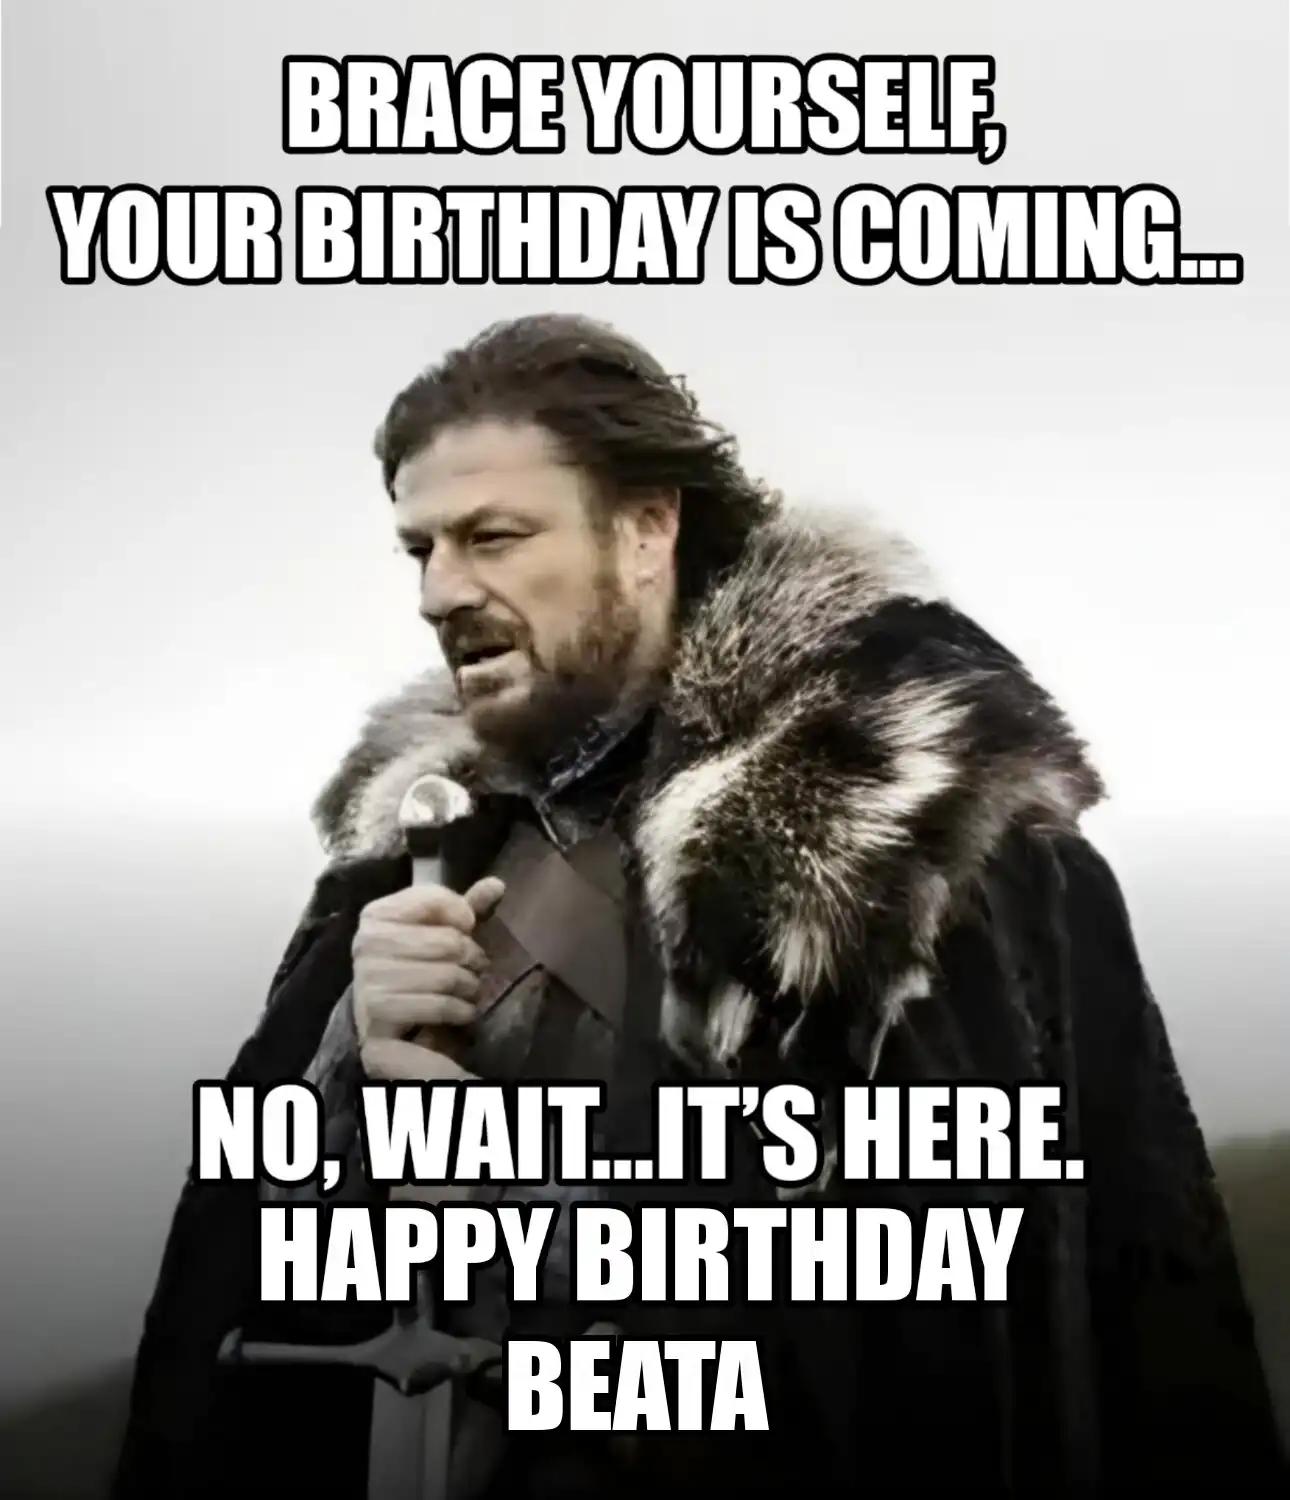 Happy Birthday Beata Brace Yourself Your Birthday Is Coming Meme